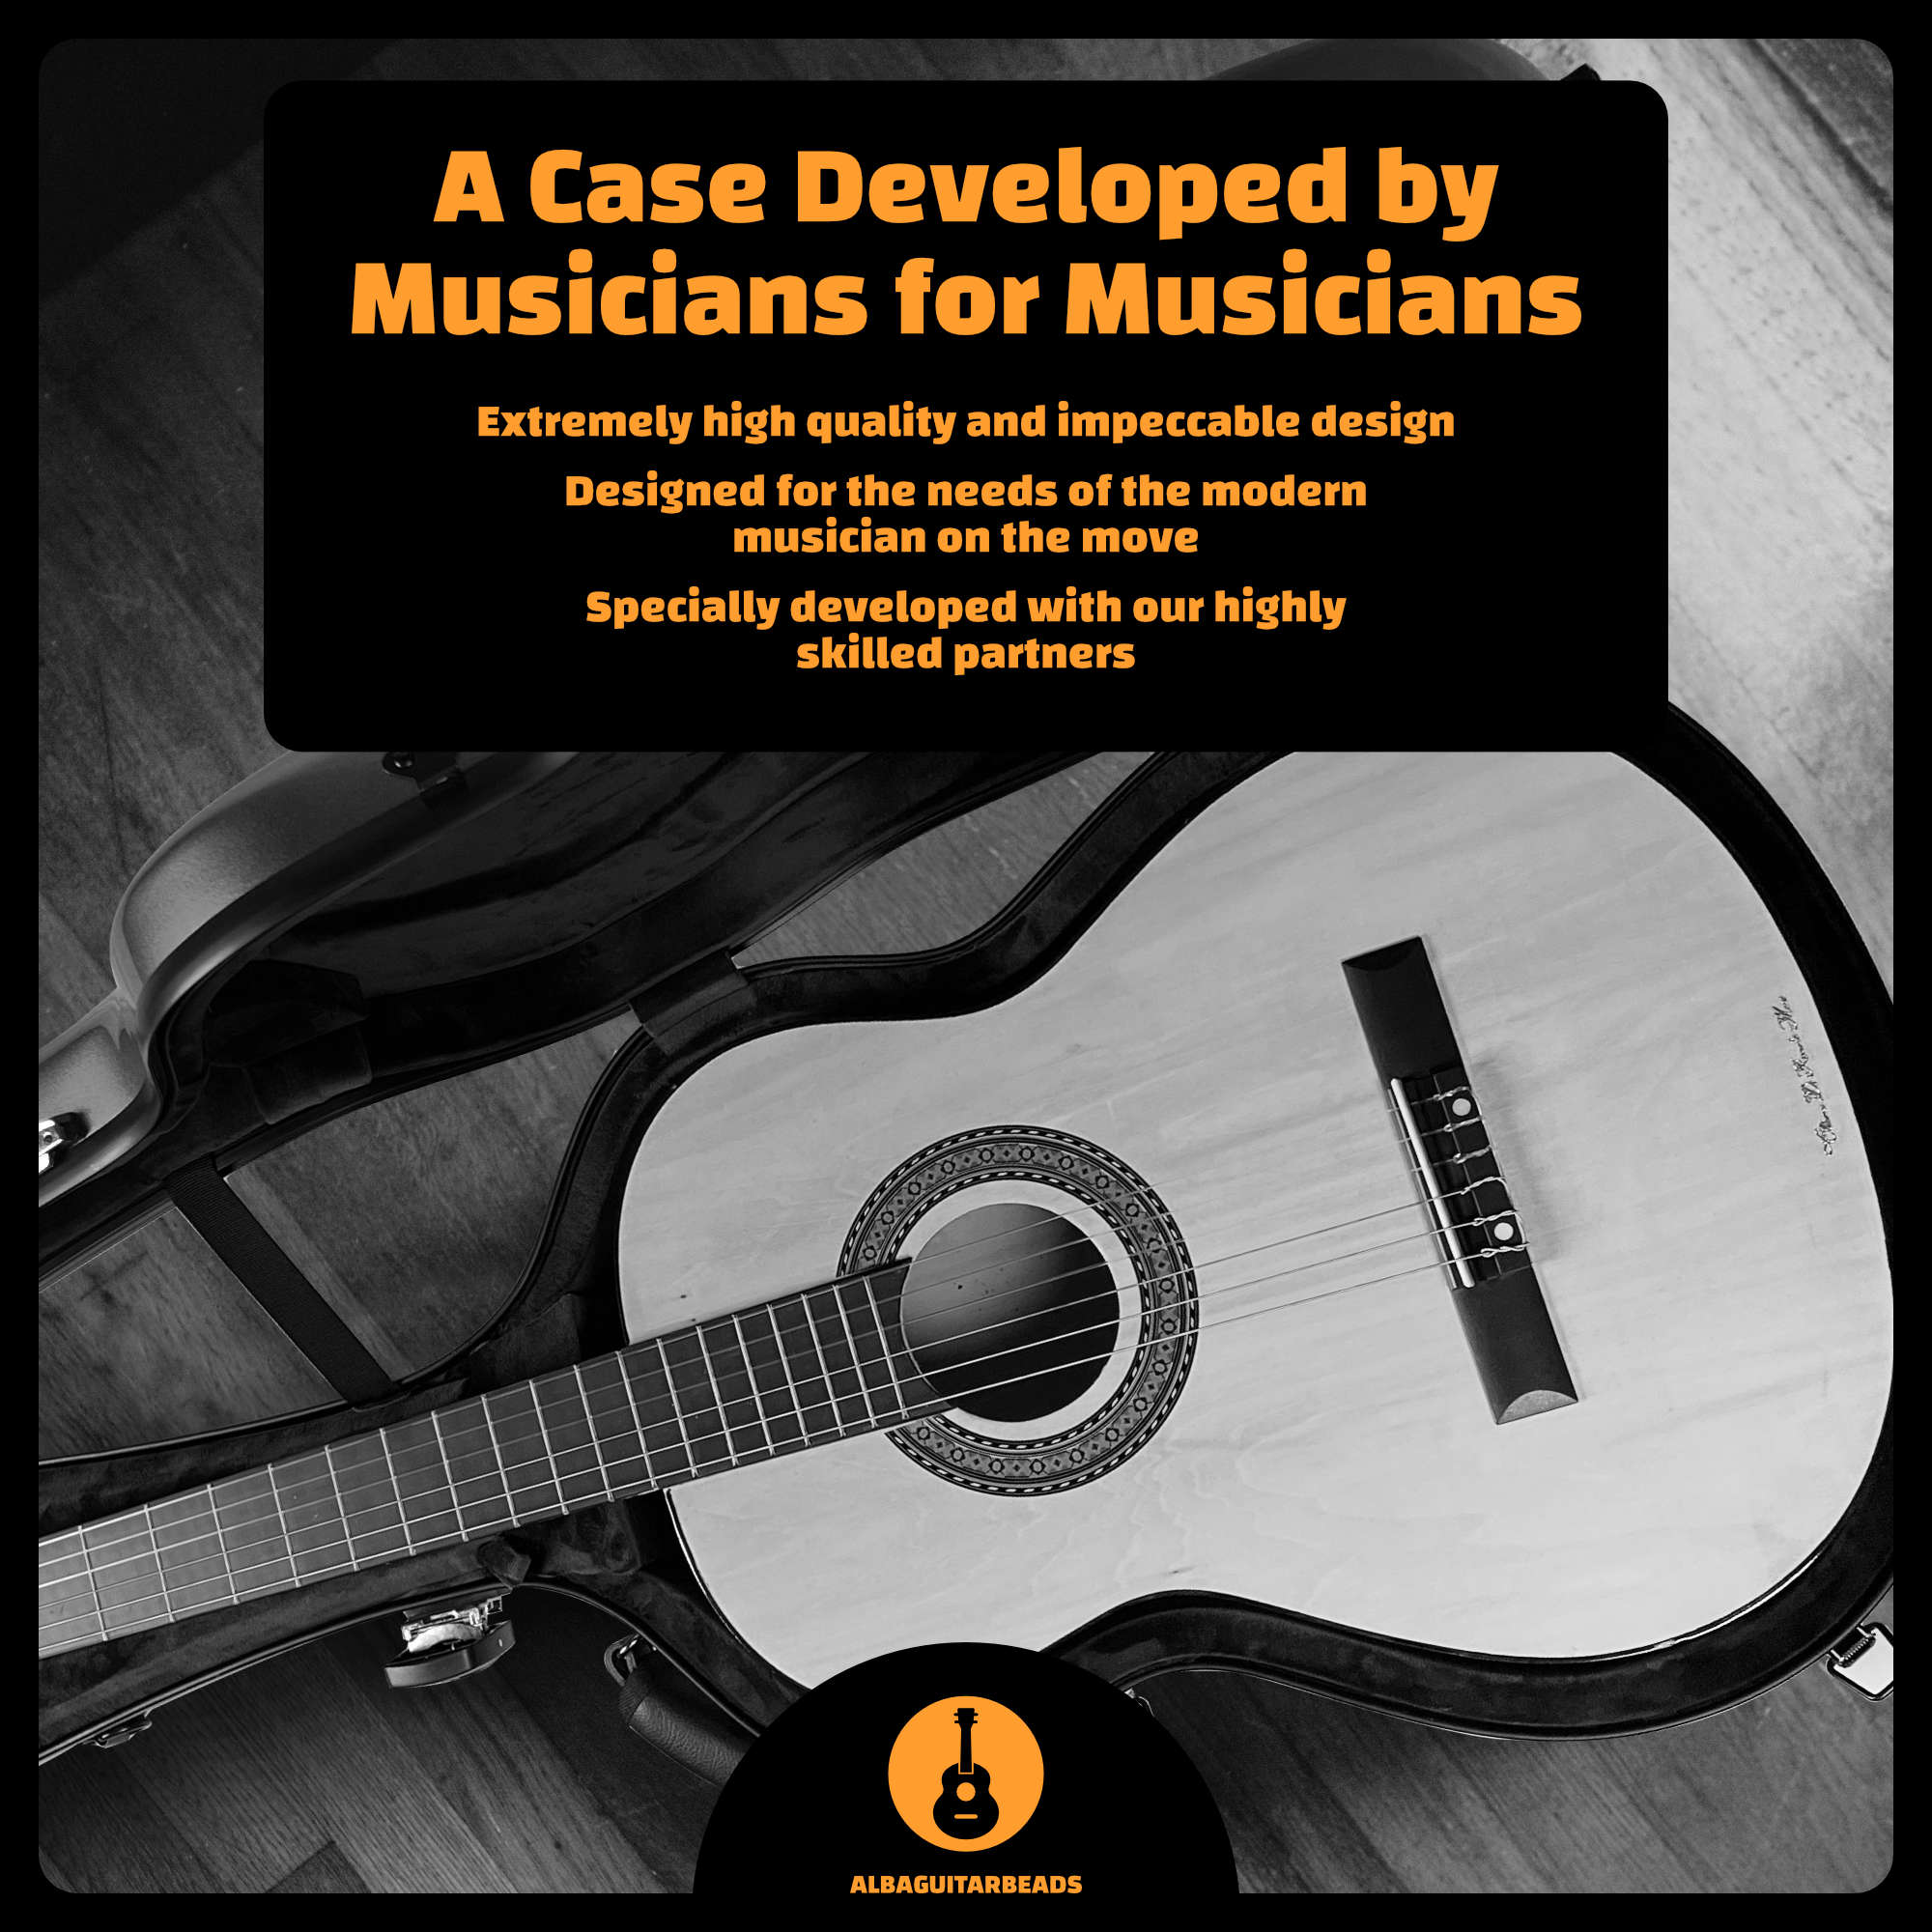 Carbon Alba Guitar Case Champagne Matte for Classical Guitar Acoustic, Flamenco guitar case